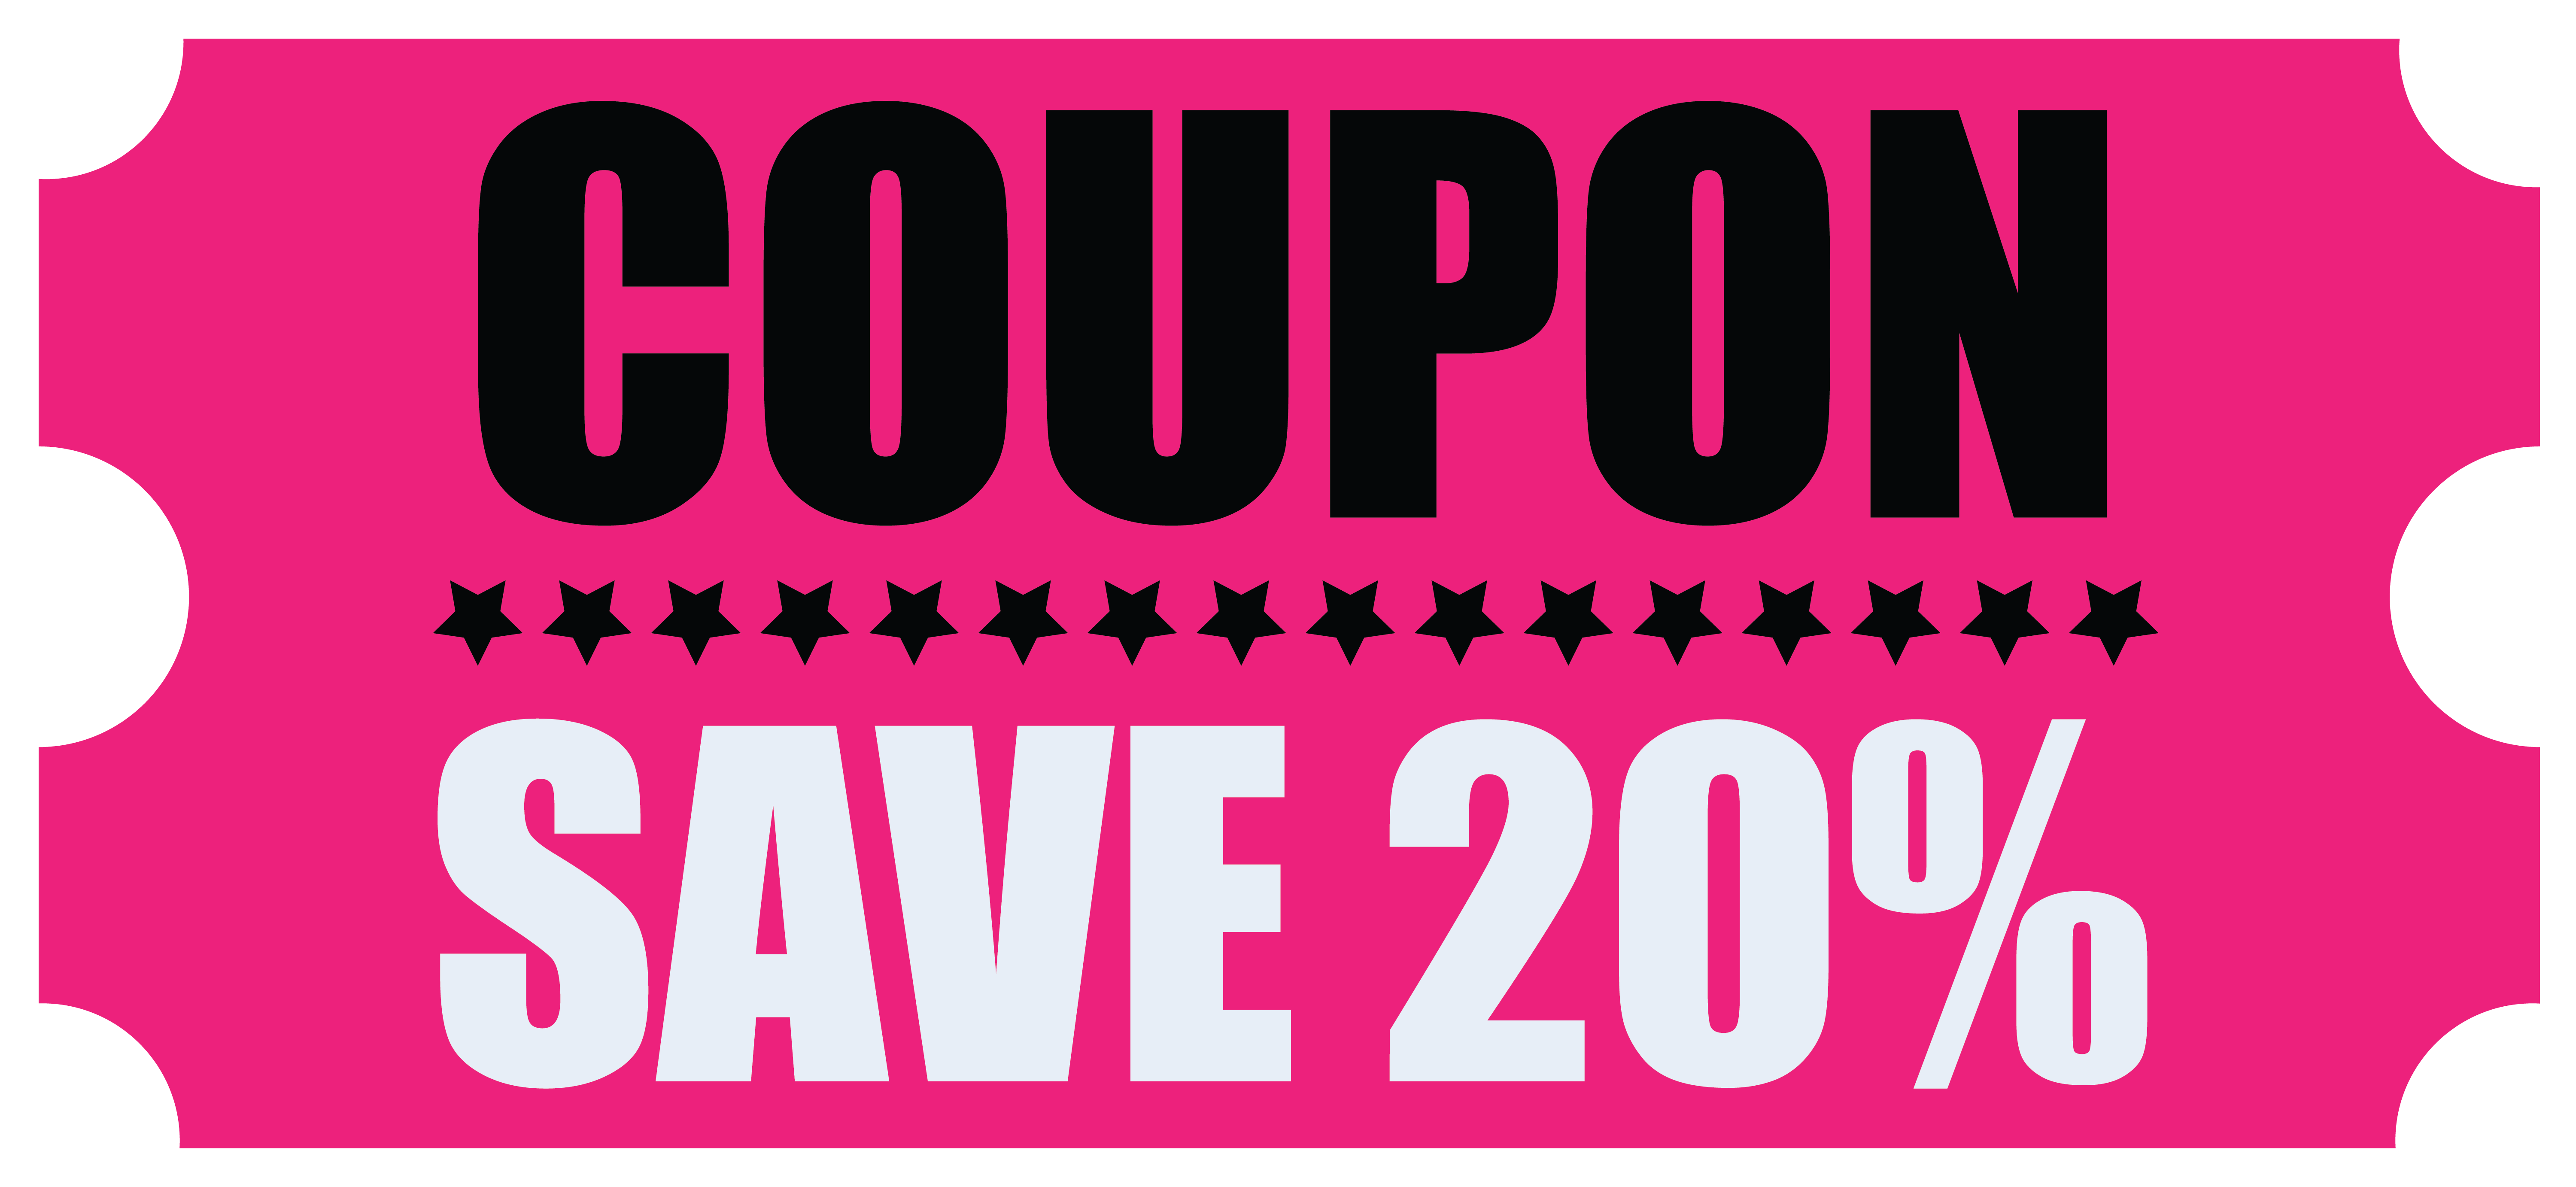 clipart coupon design - photo #20